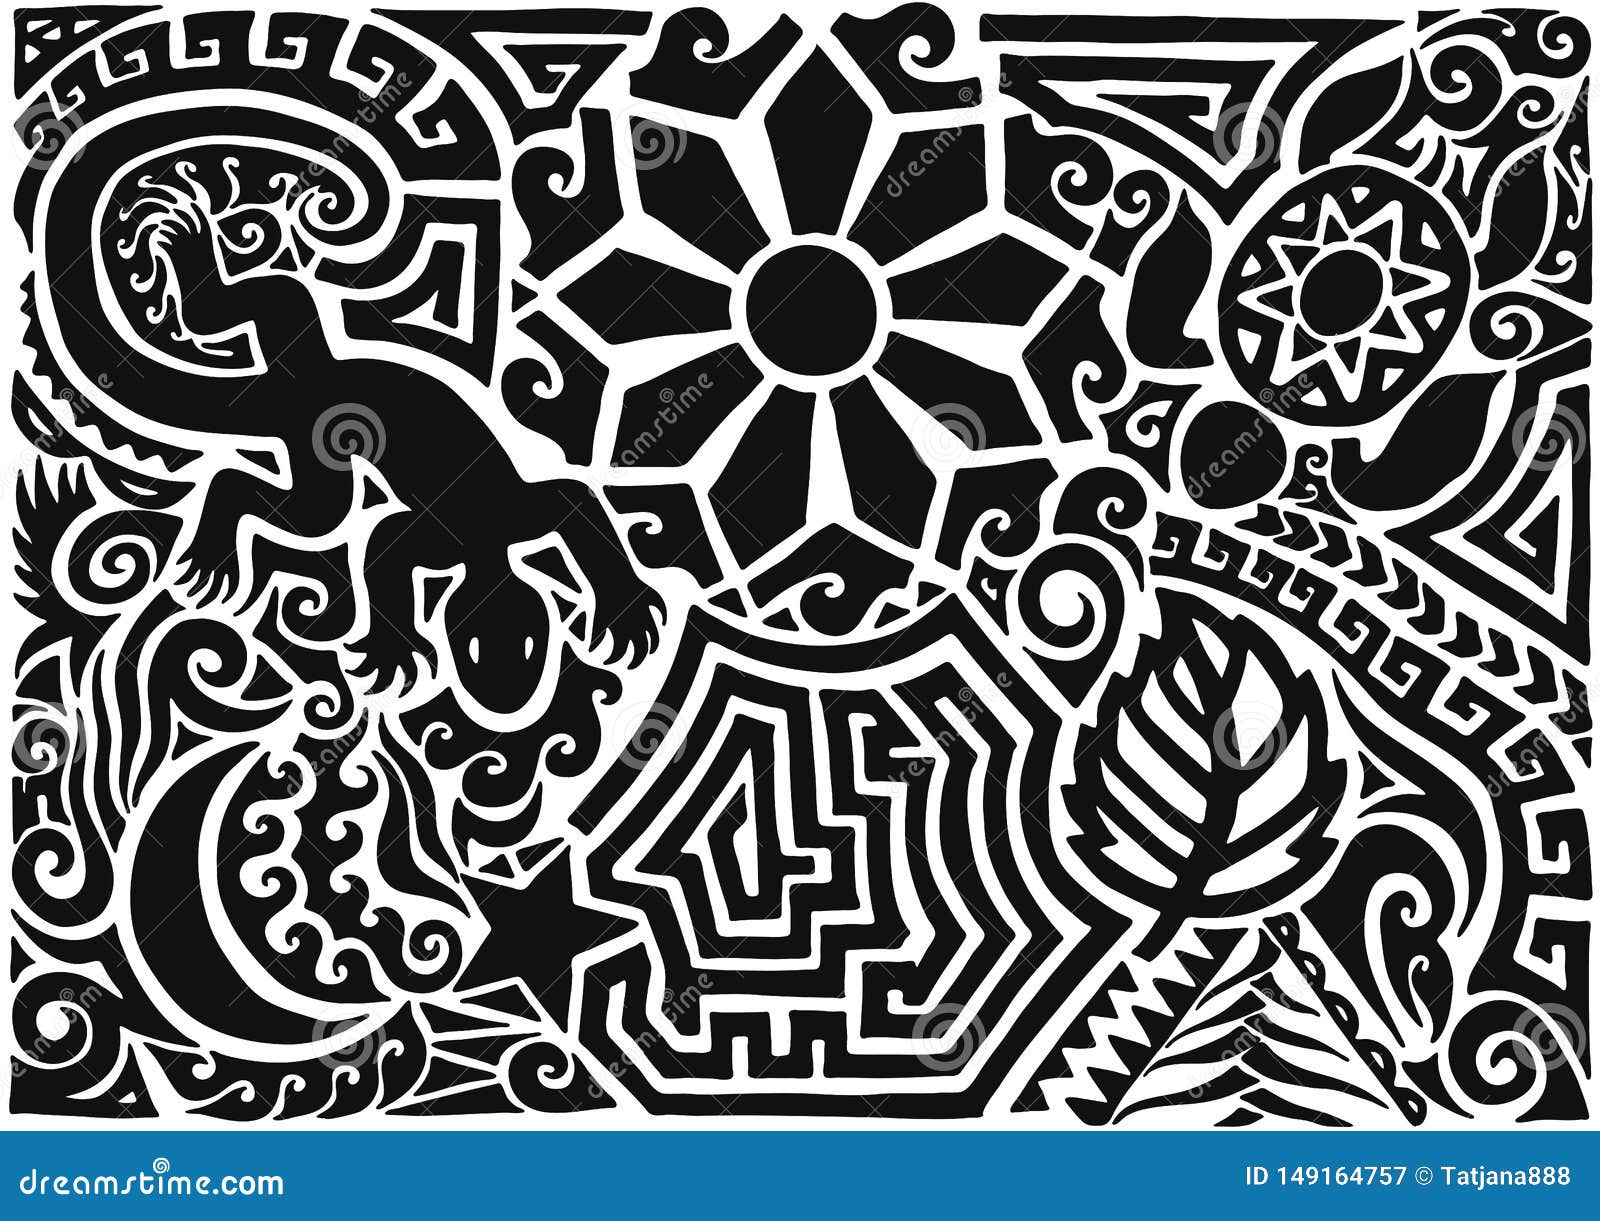 Premium Photo | Maori tattoo design hanoi symbol combined with a lotus  flower